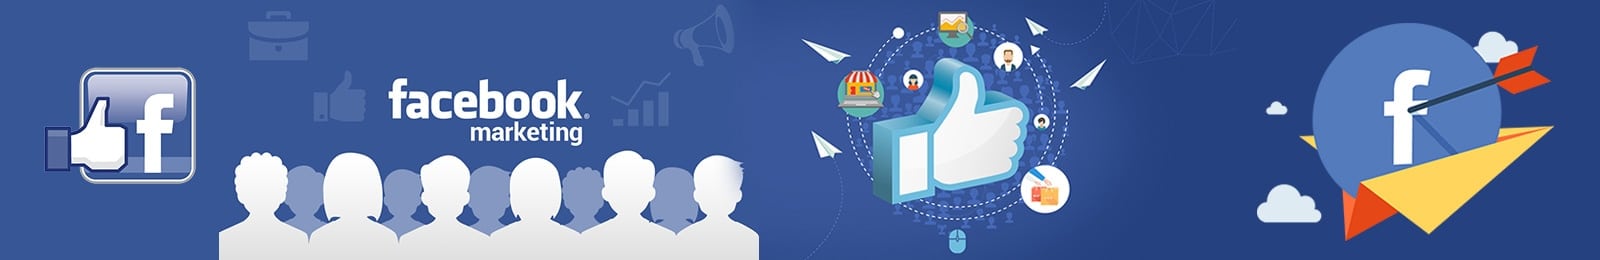 facebook-marketing-banner